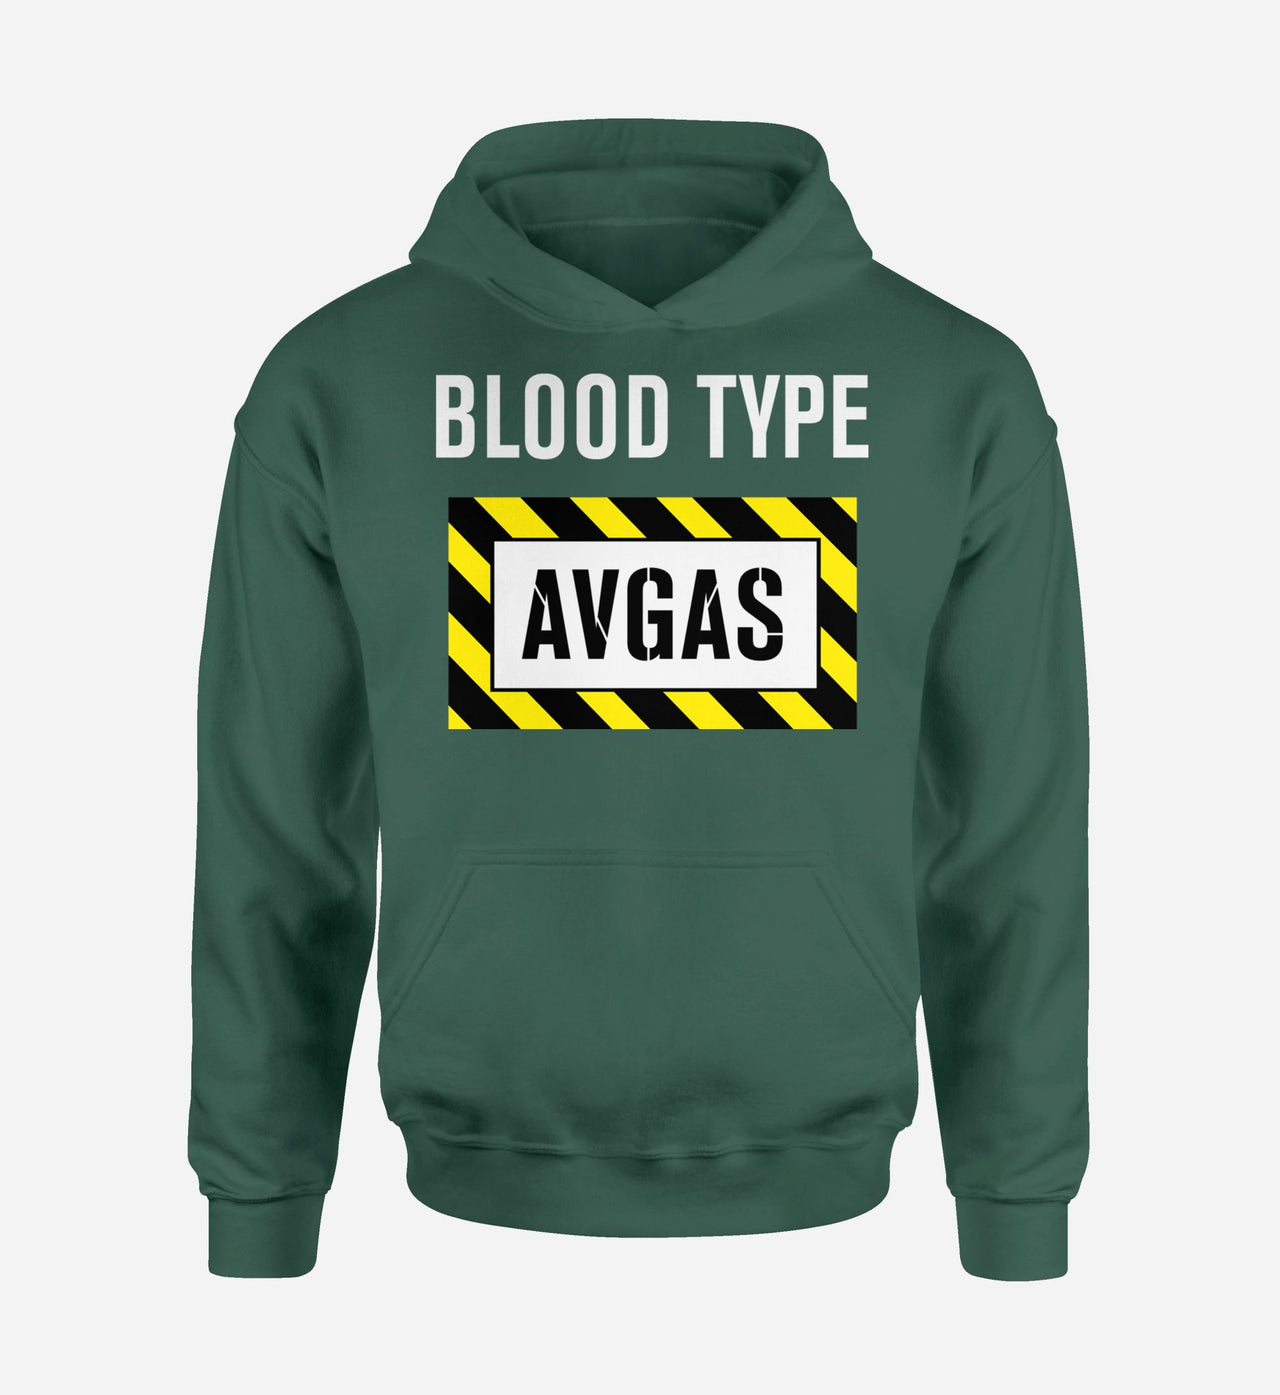 Blood Type AVGAS Designed Hoodies